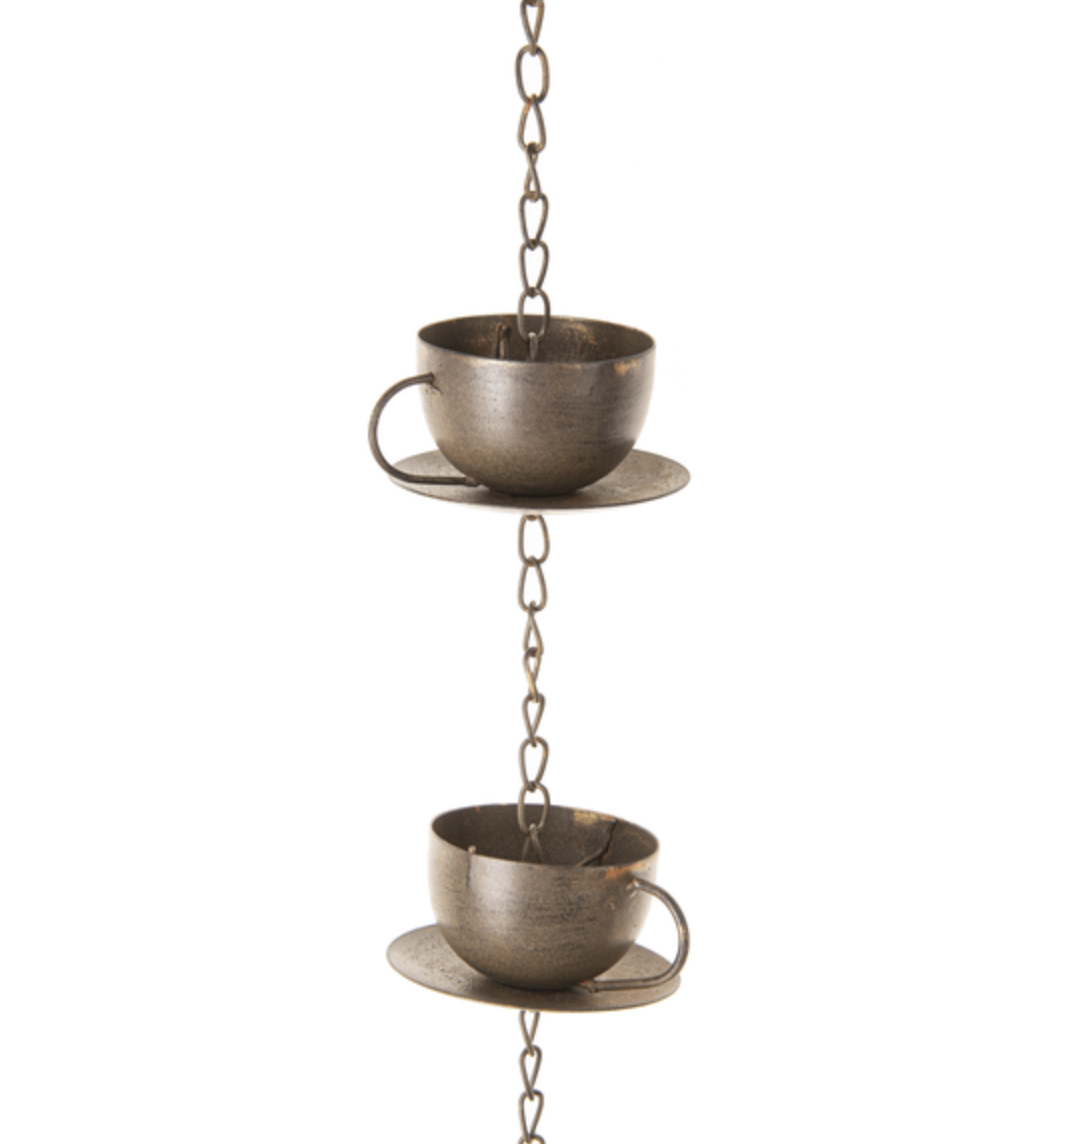 FINAL SALE Teapot & Teacup Rain Chain with Bell